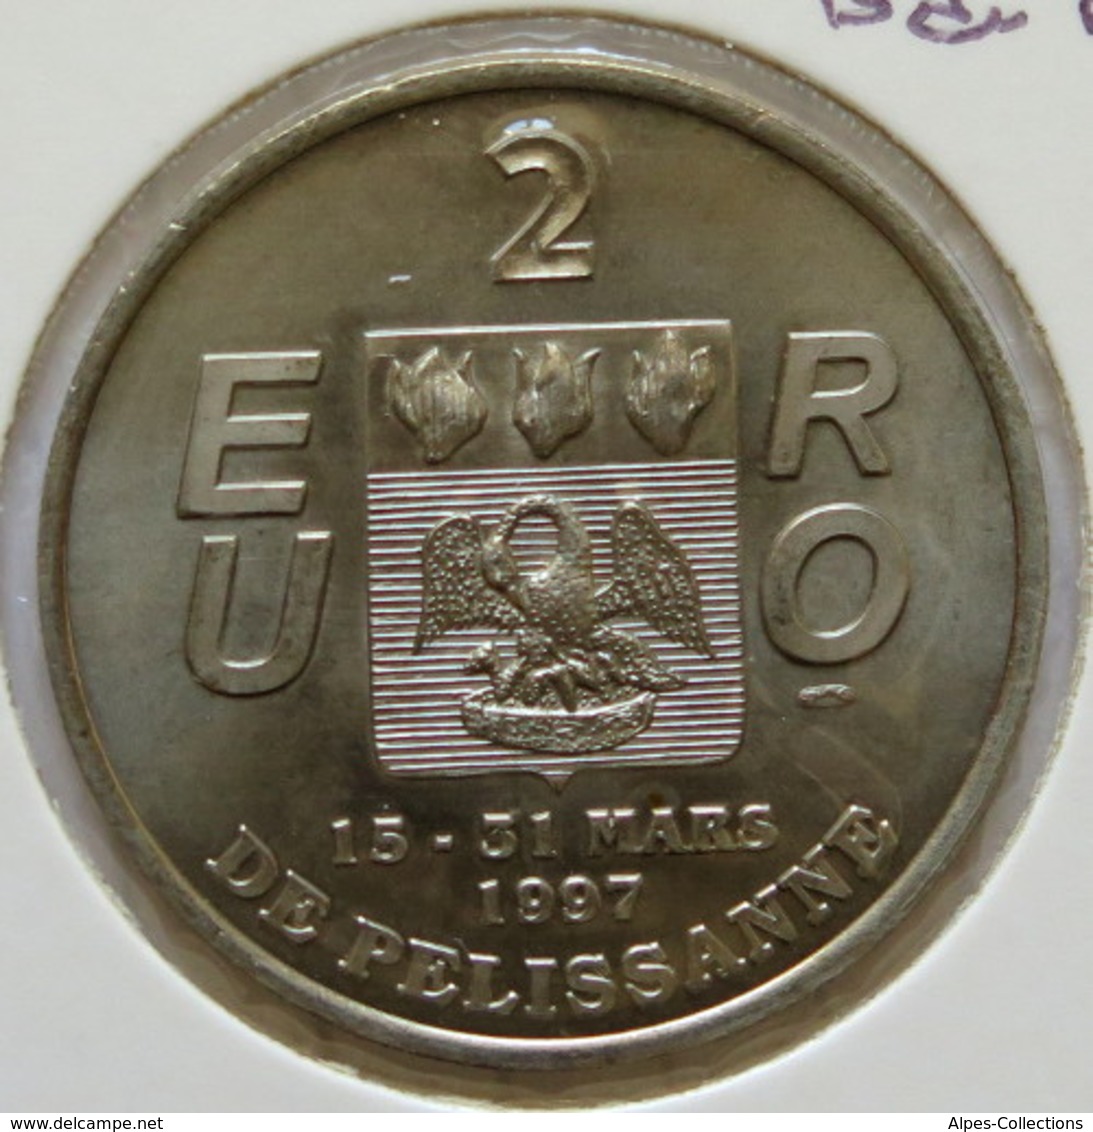 0181 - 2 EURO - PELISSANNE - 1997 - Euro Van De Steden